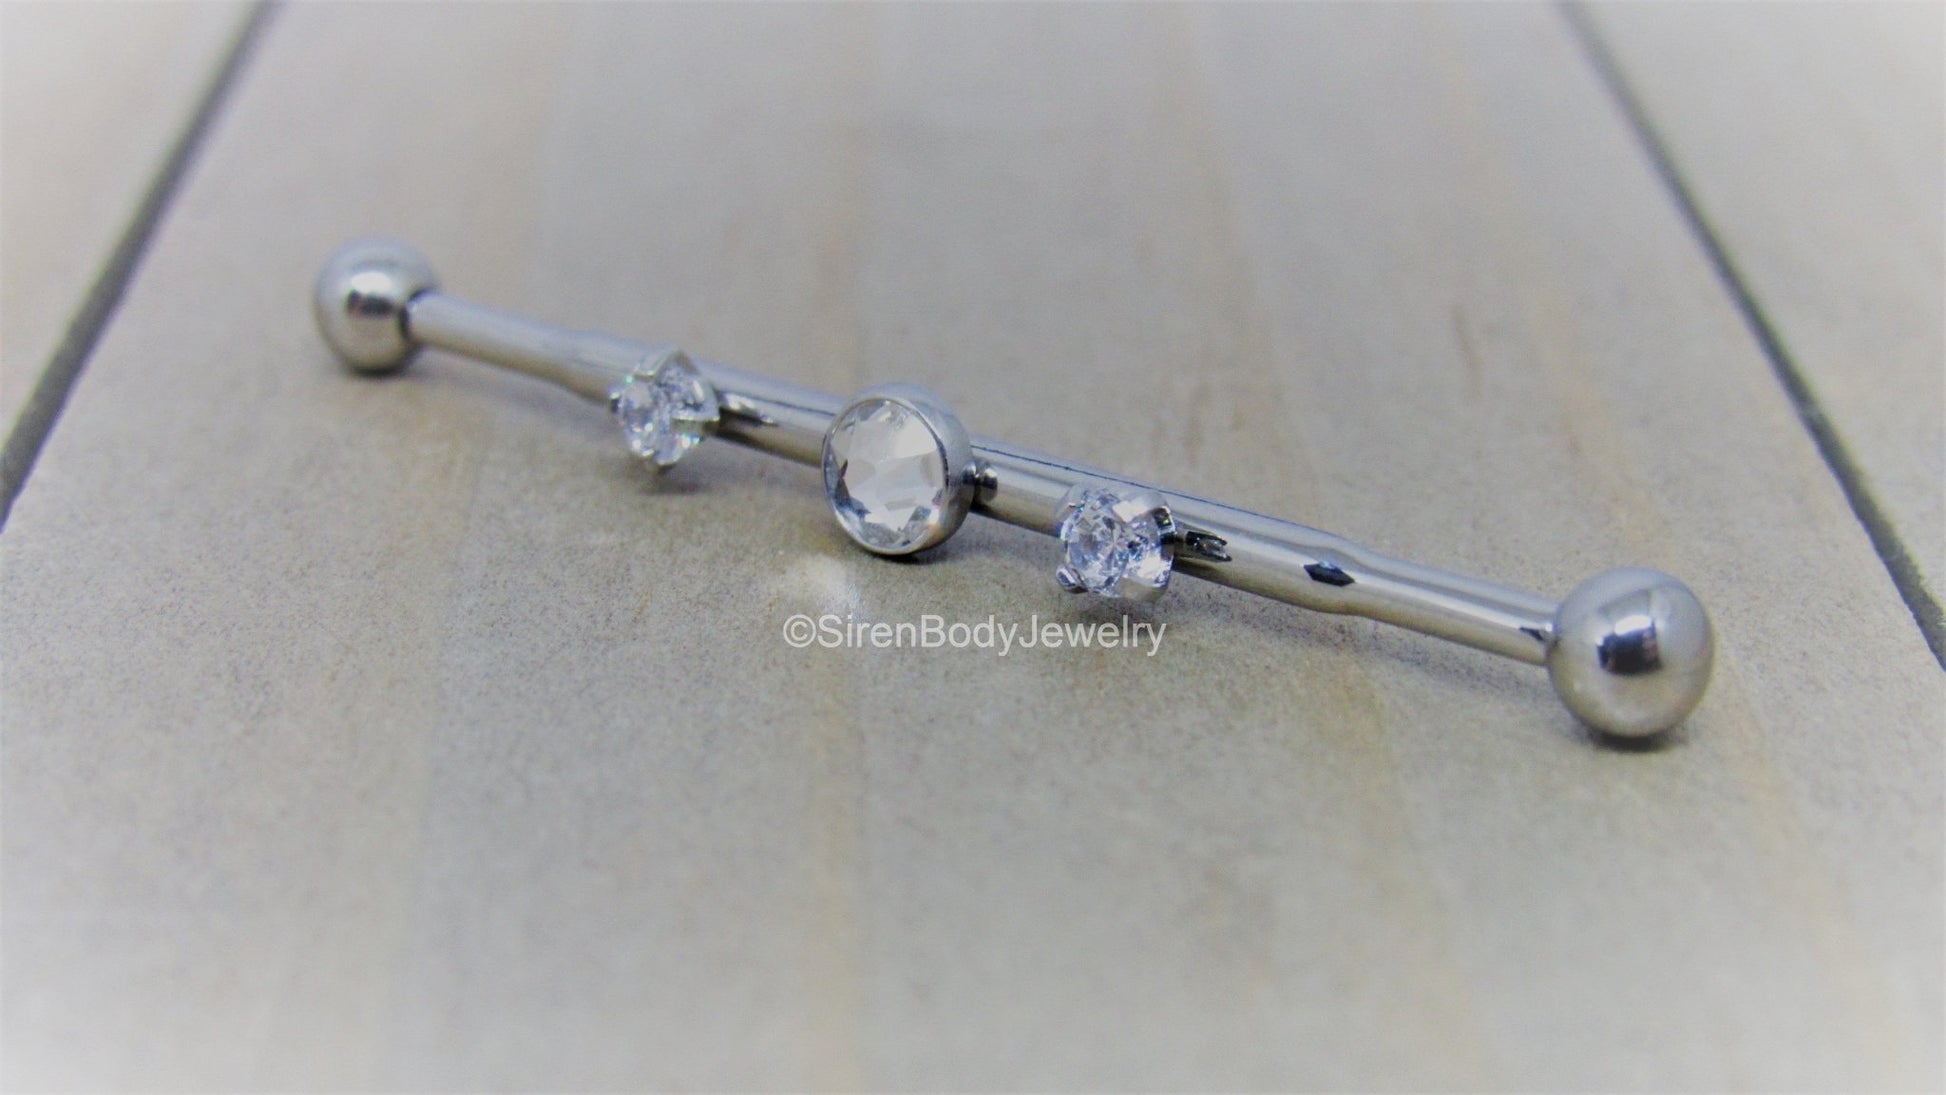 14g Titanium industrial piercing barbell 3 hole scaffold bar pick your length clear Swarovski gemstones - SirenBodyJewelry